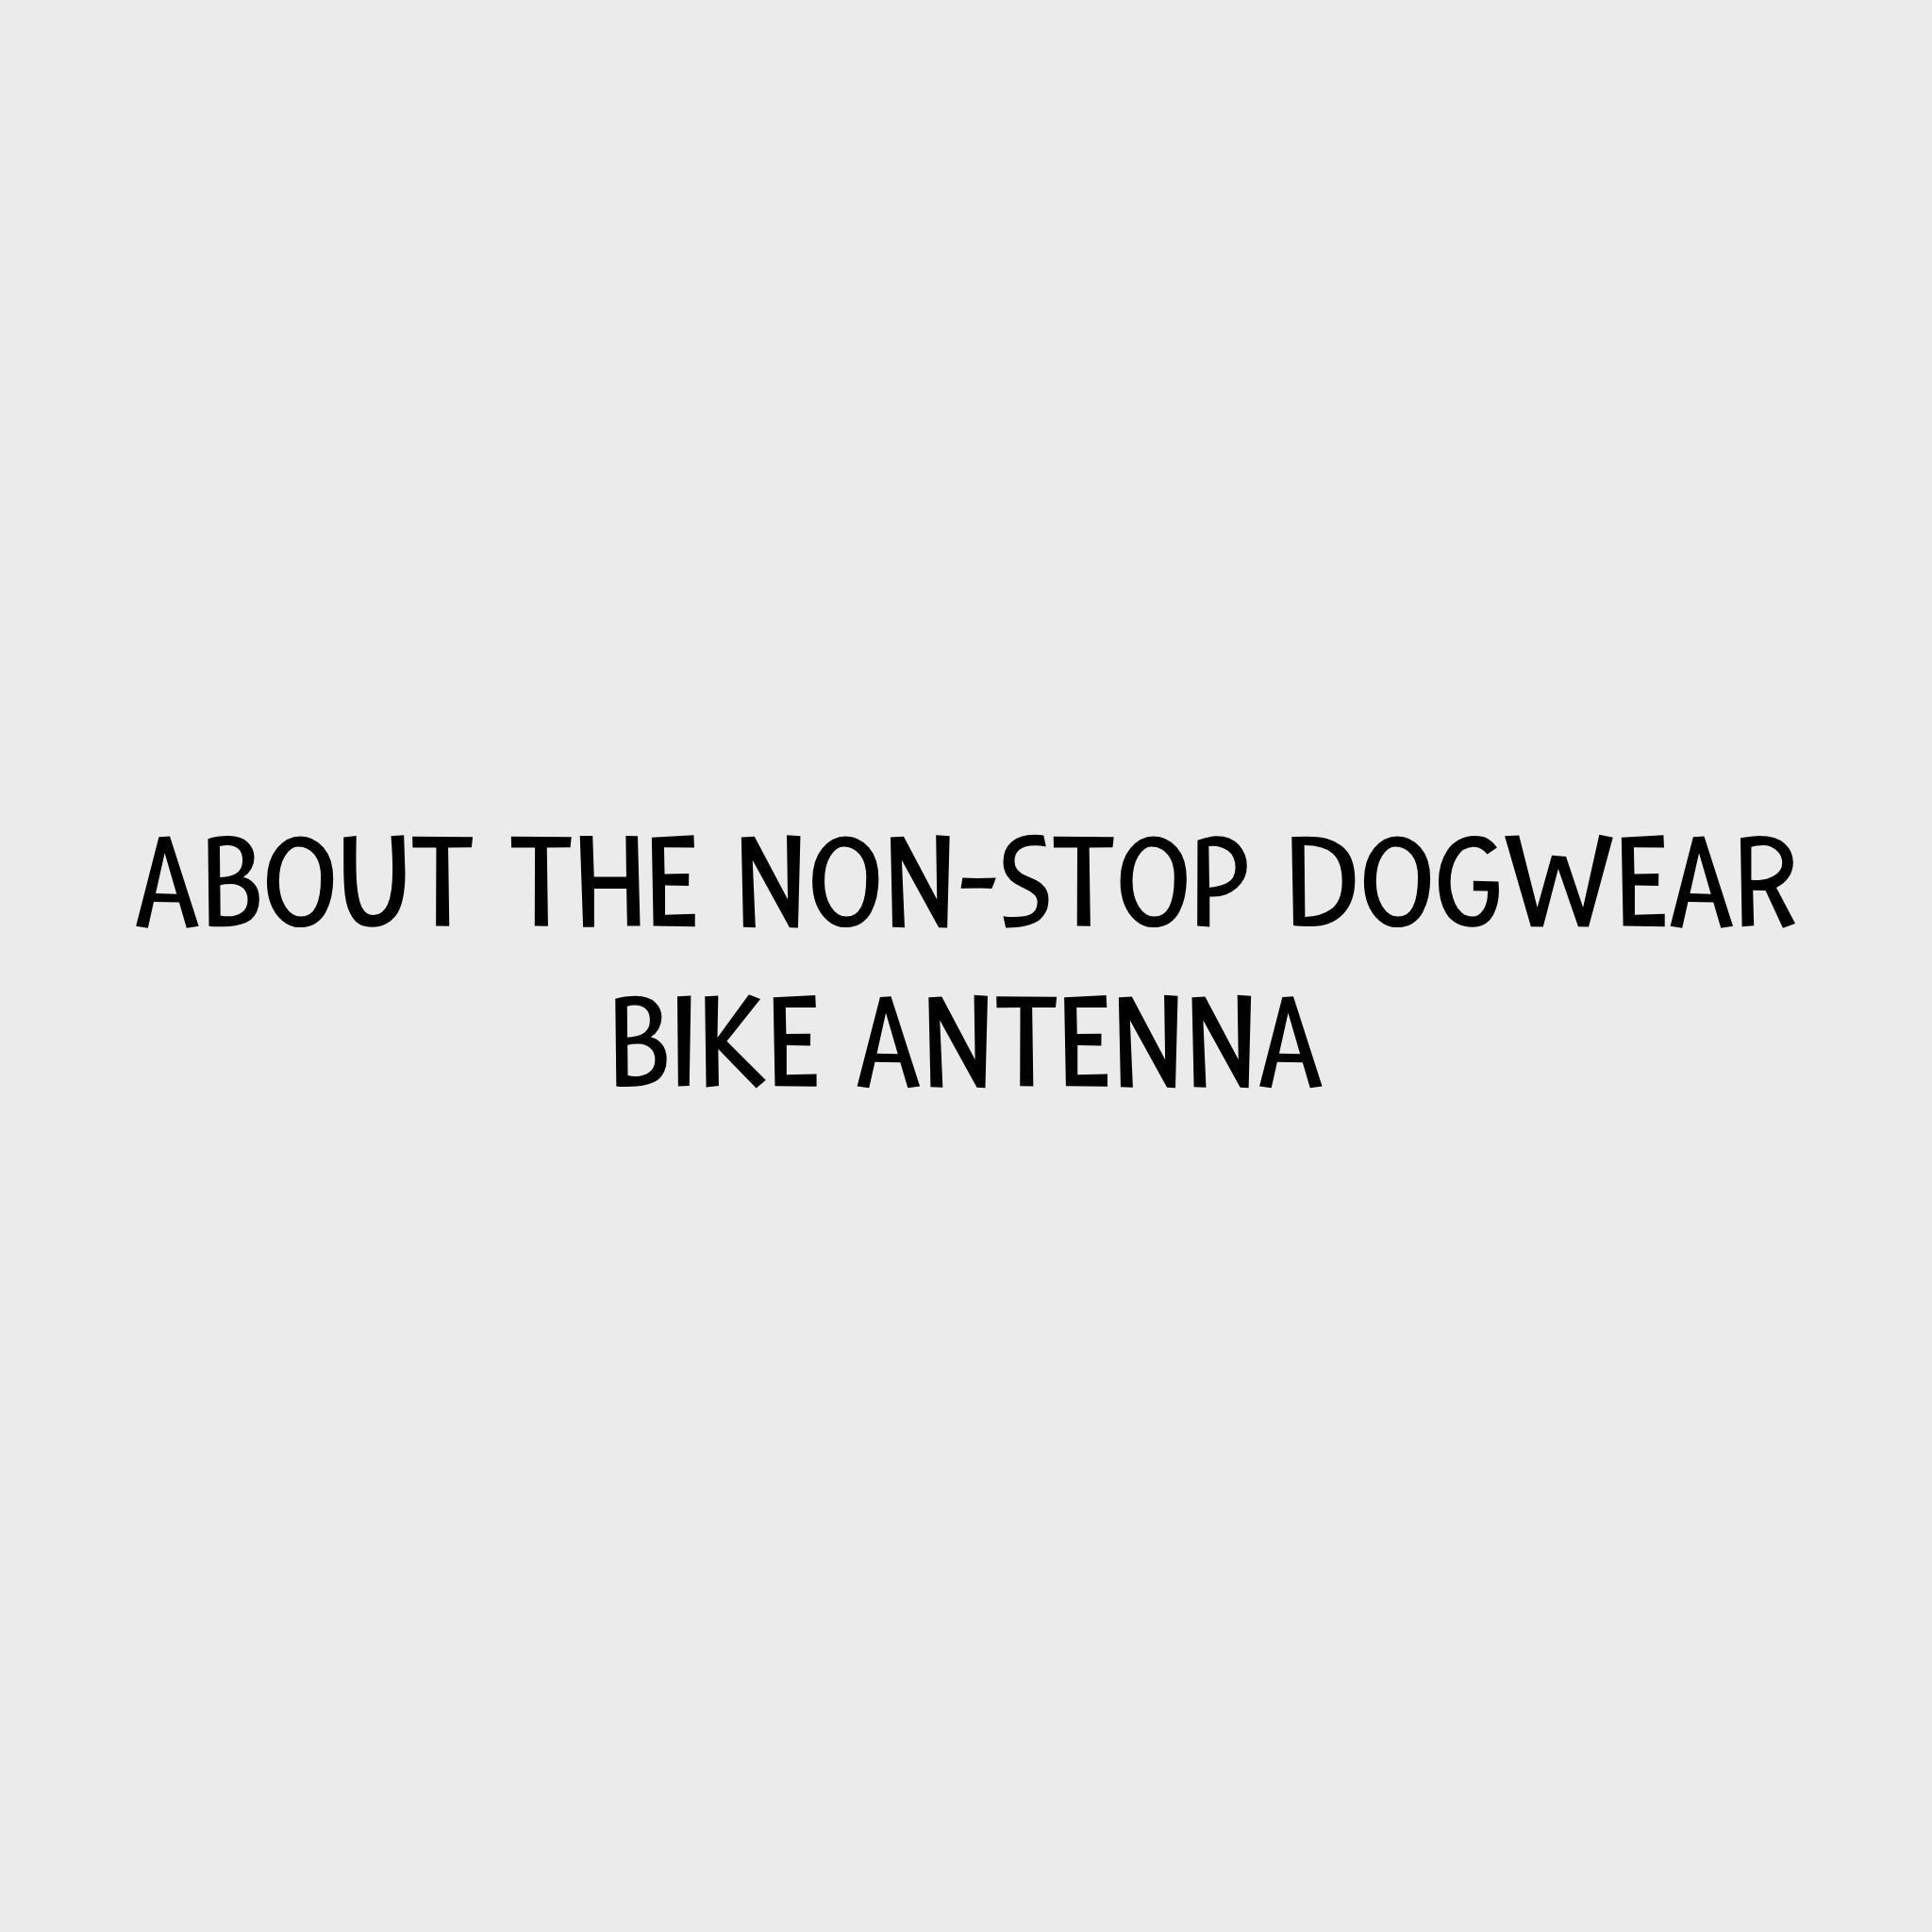 Video - Non-stop dogwear Bike Antenna